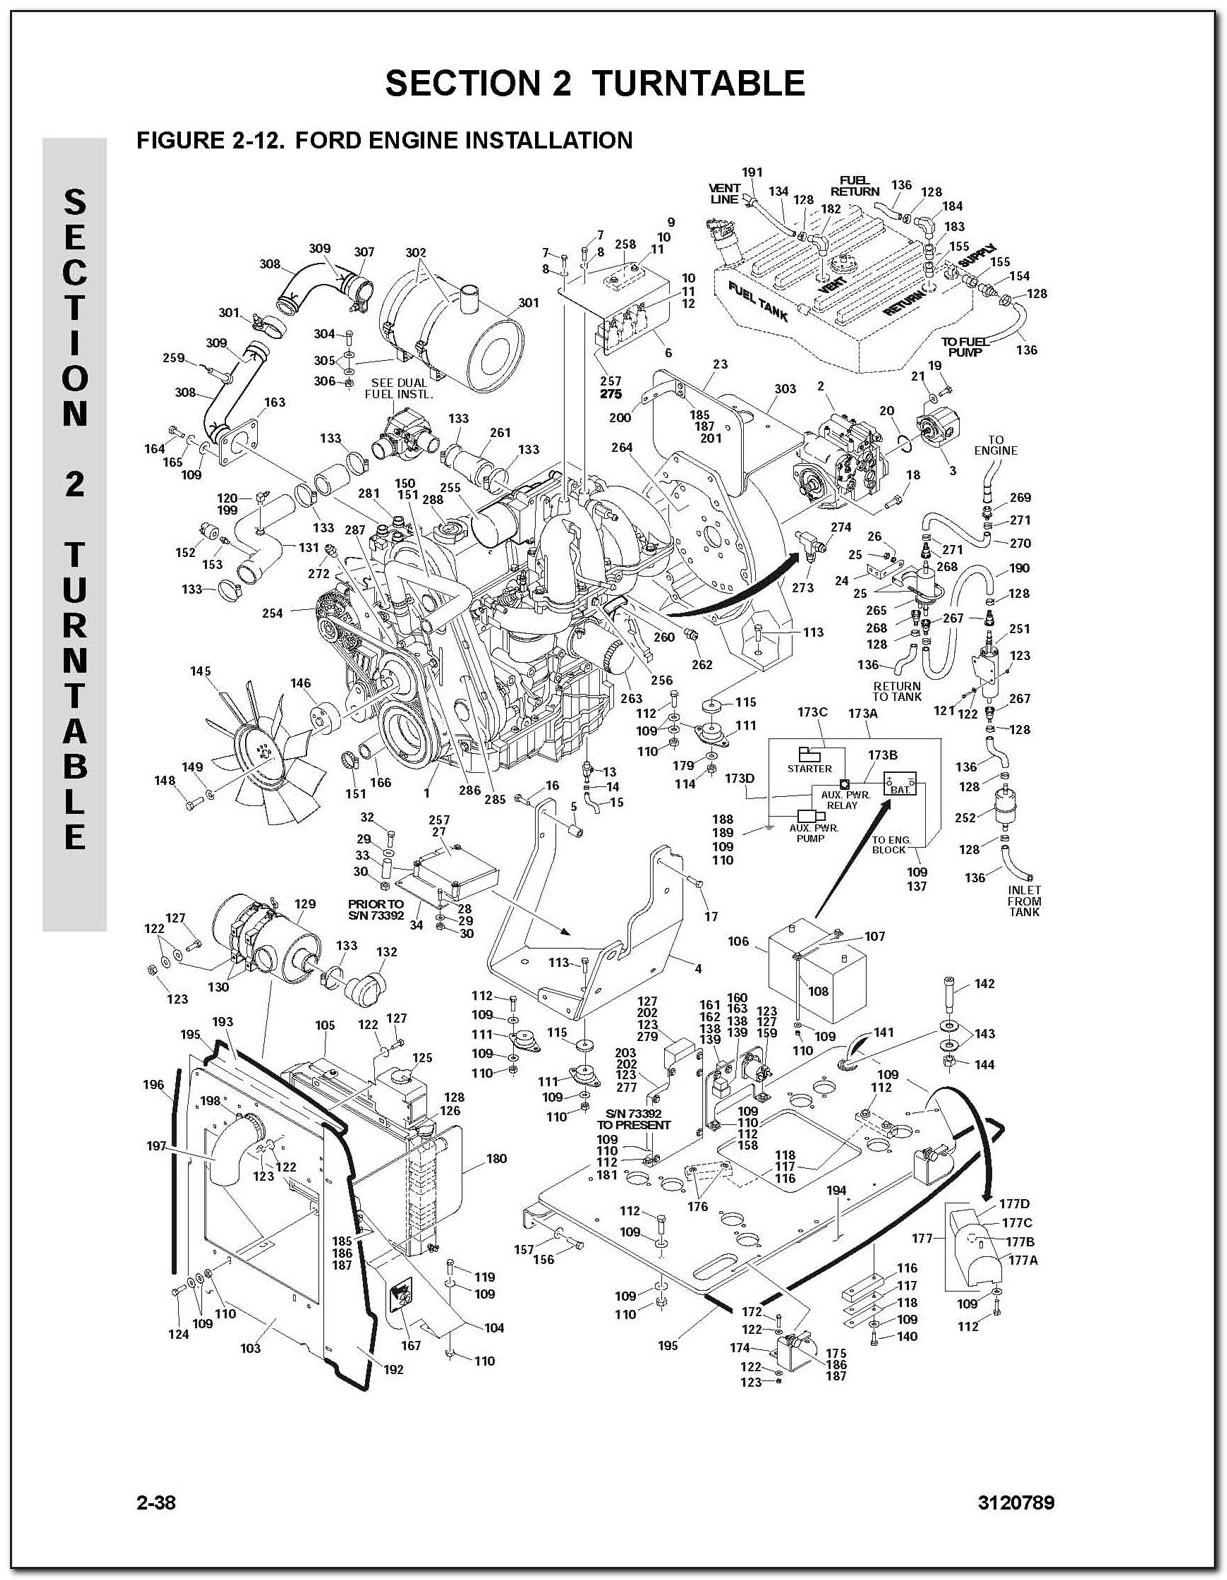 Sullair 185 Compressor Wiring Diagram